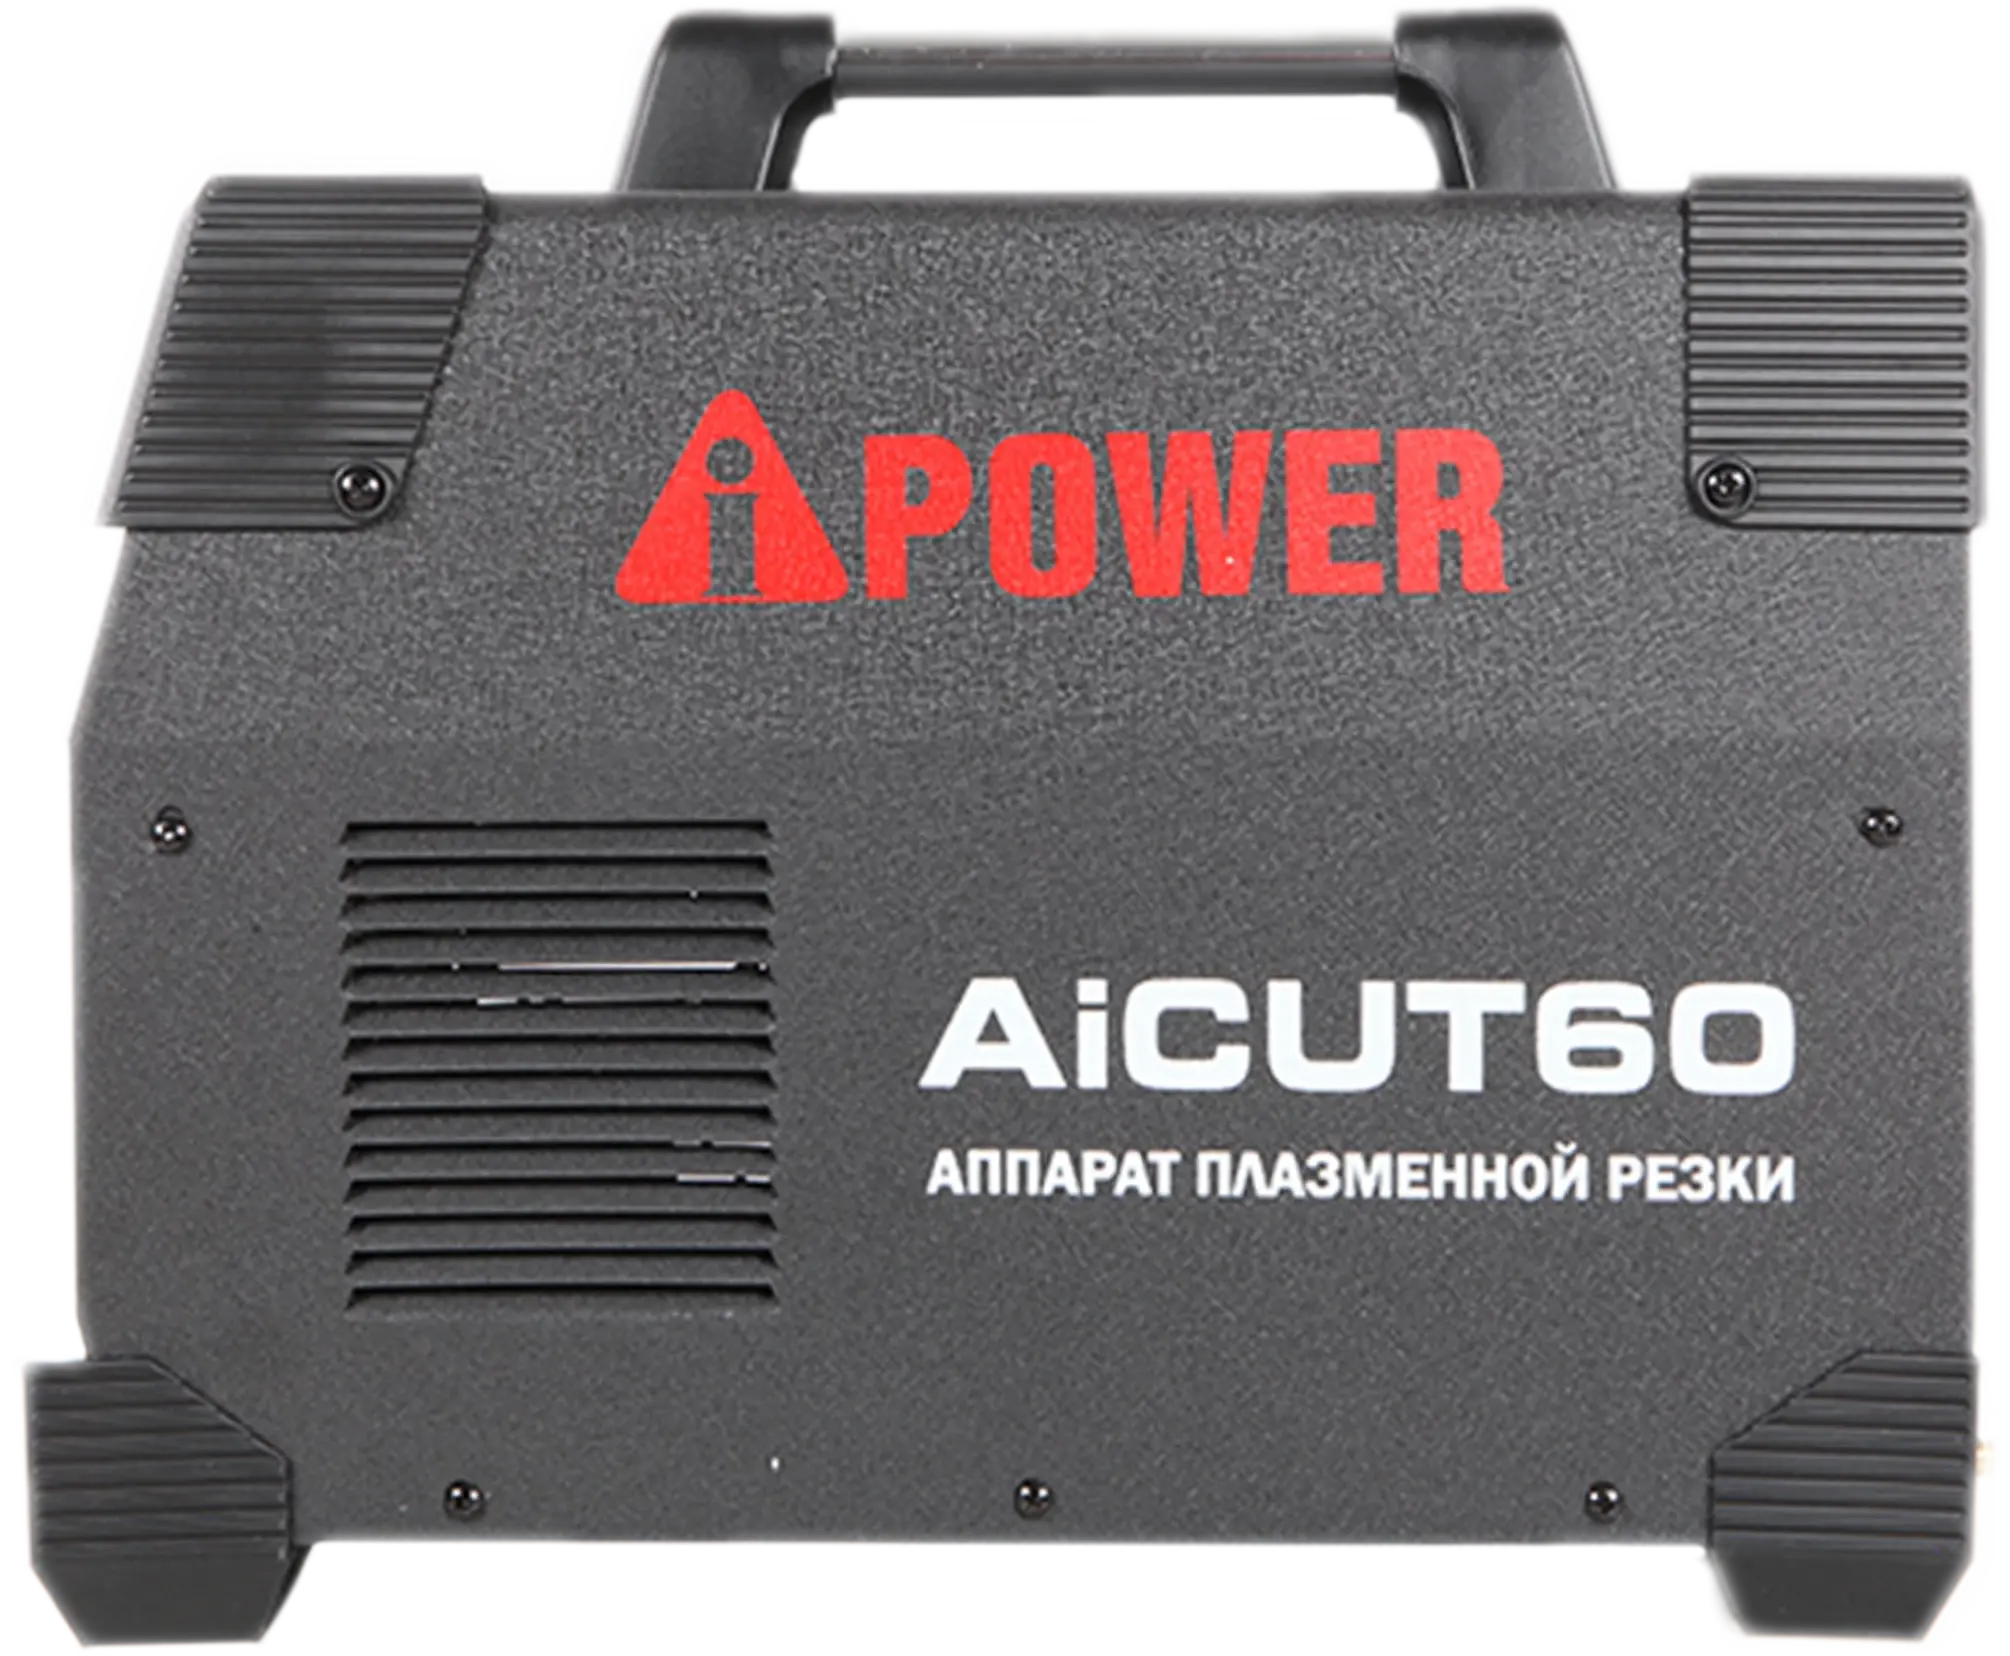 Аппарат плазменной резки A-IPOWER AICUT60